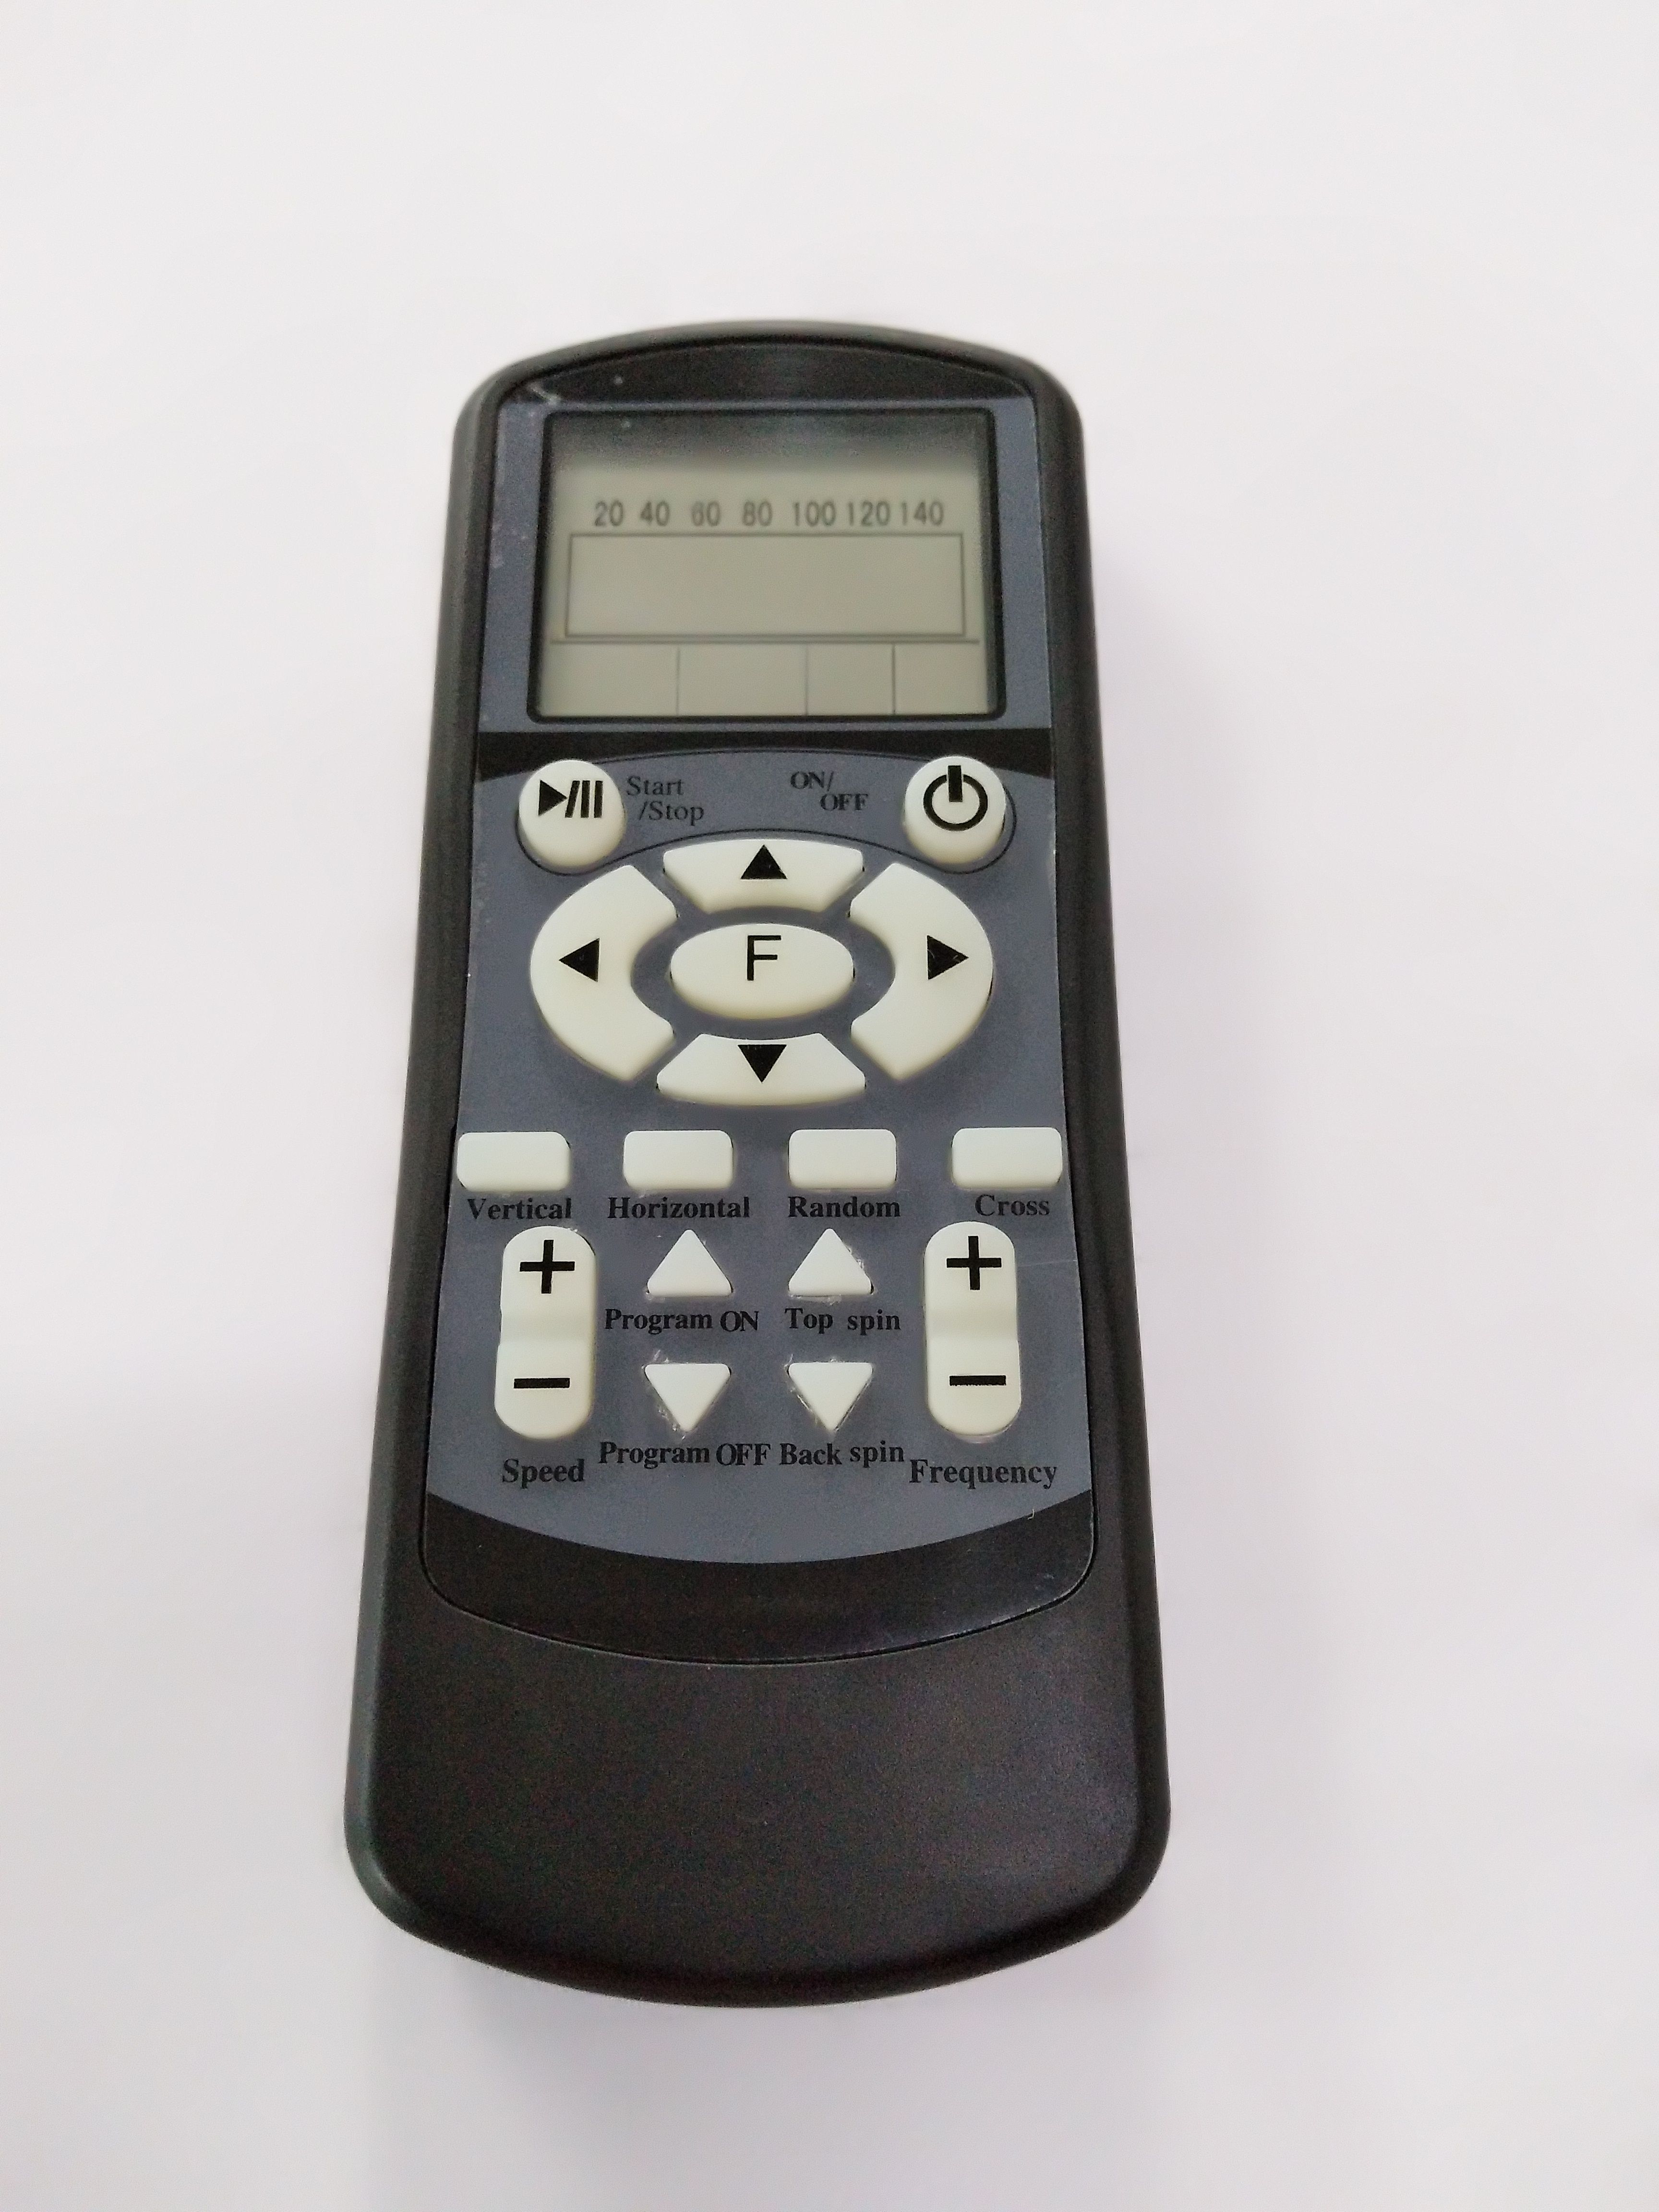 Ballmachine Accessories: MSV PlayTec Remote Control A1